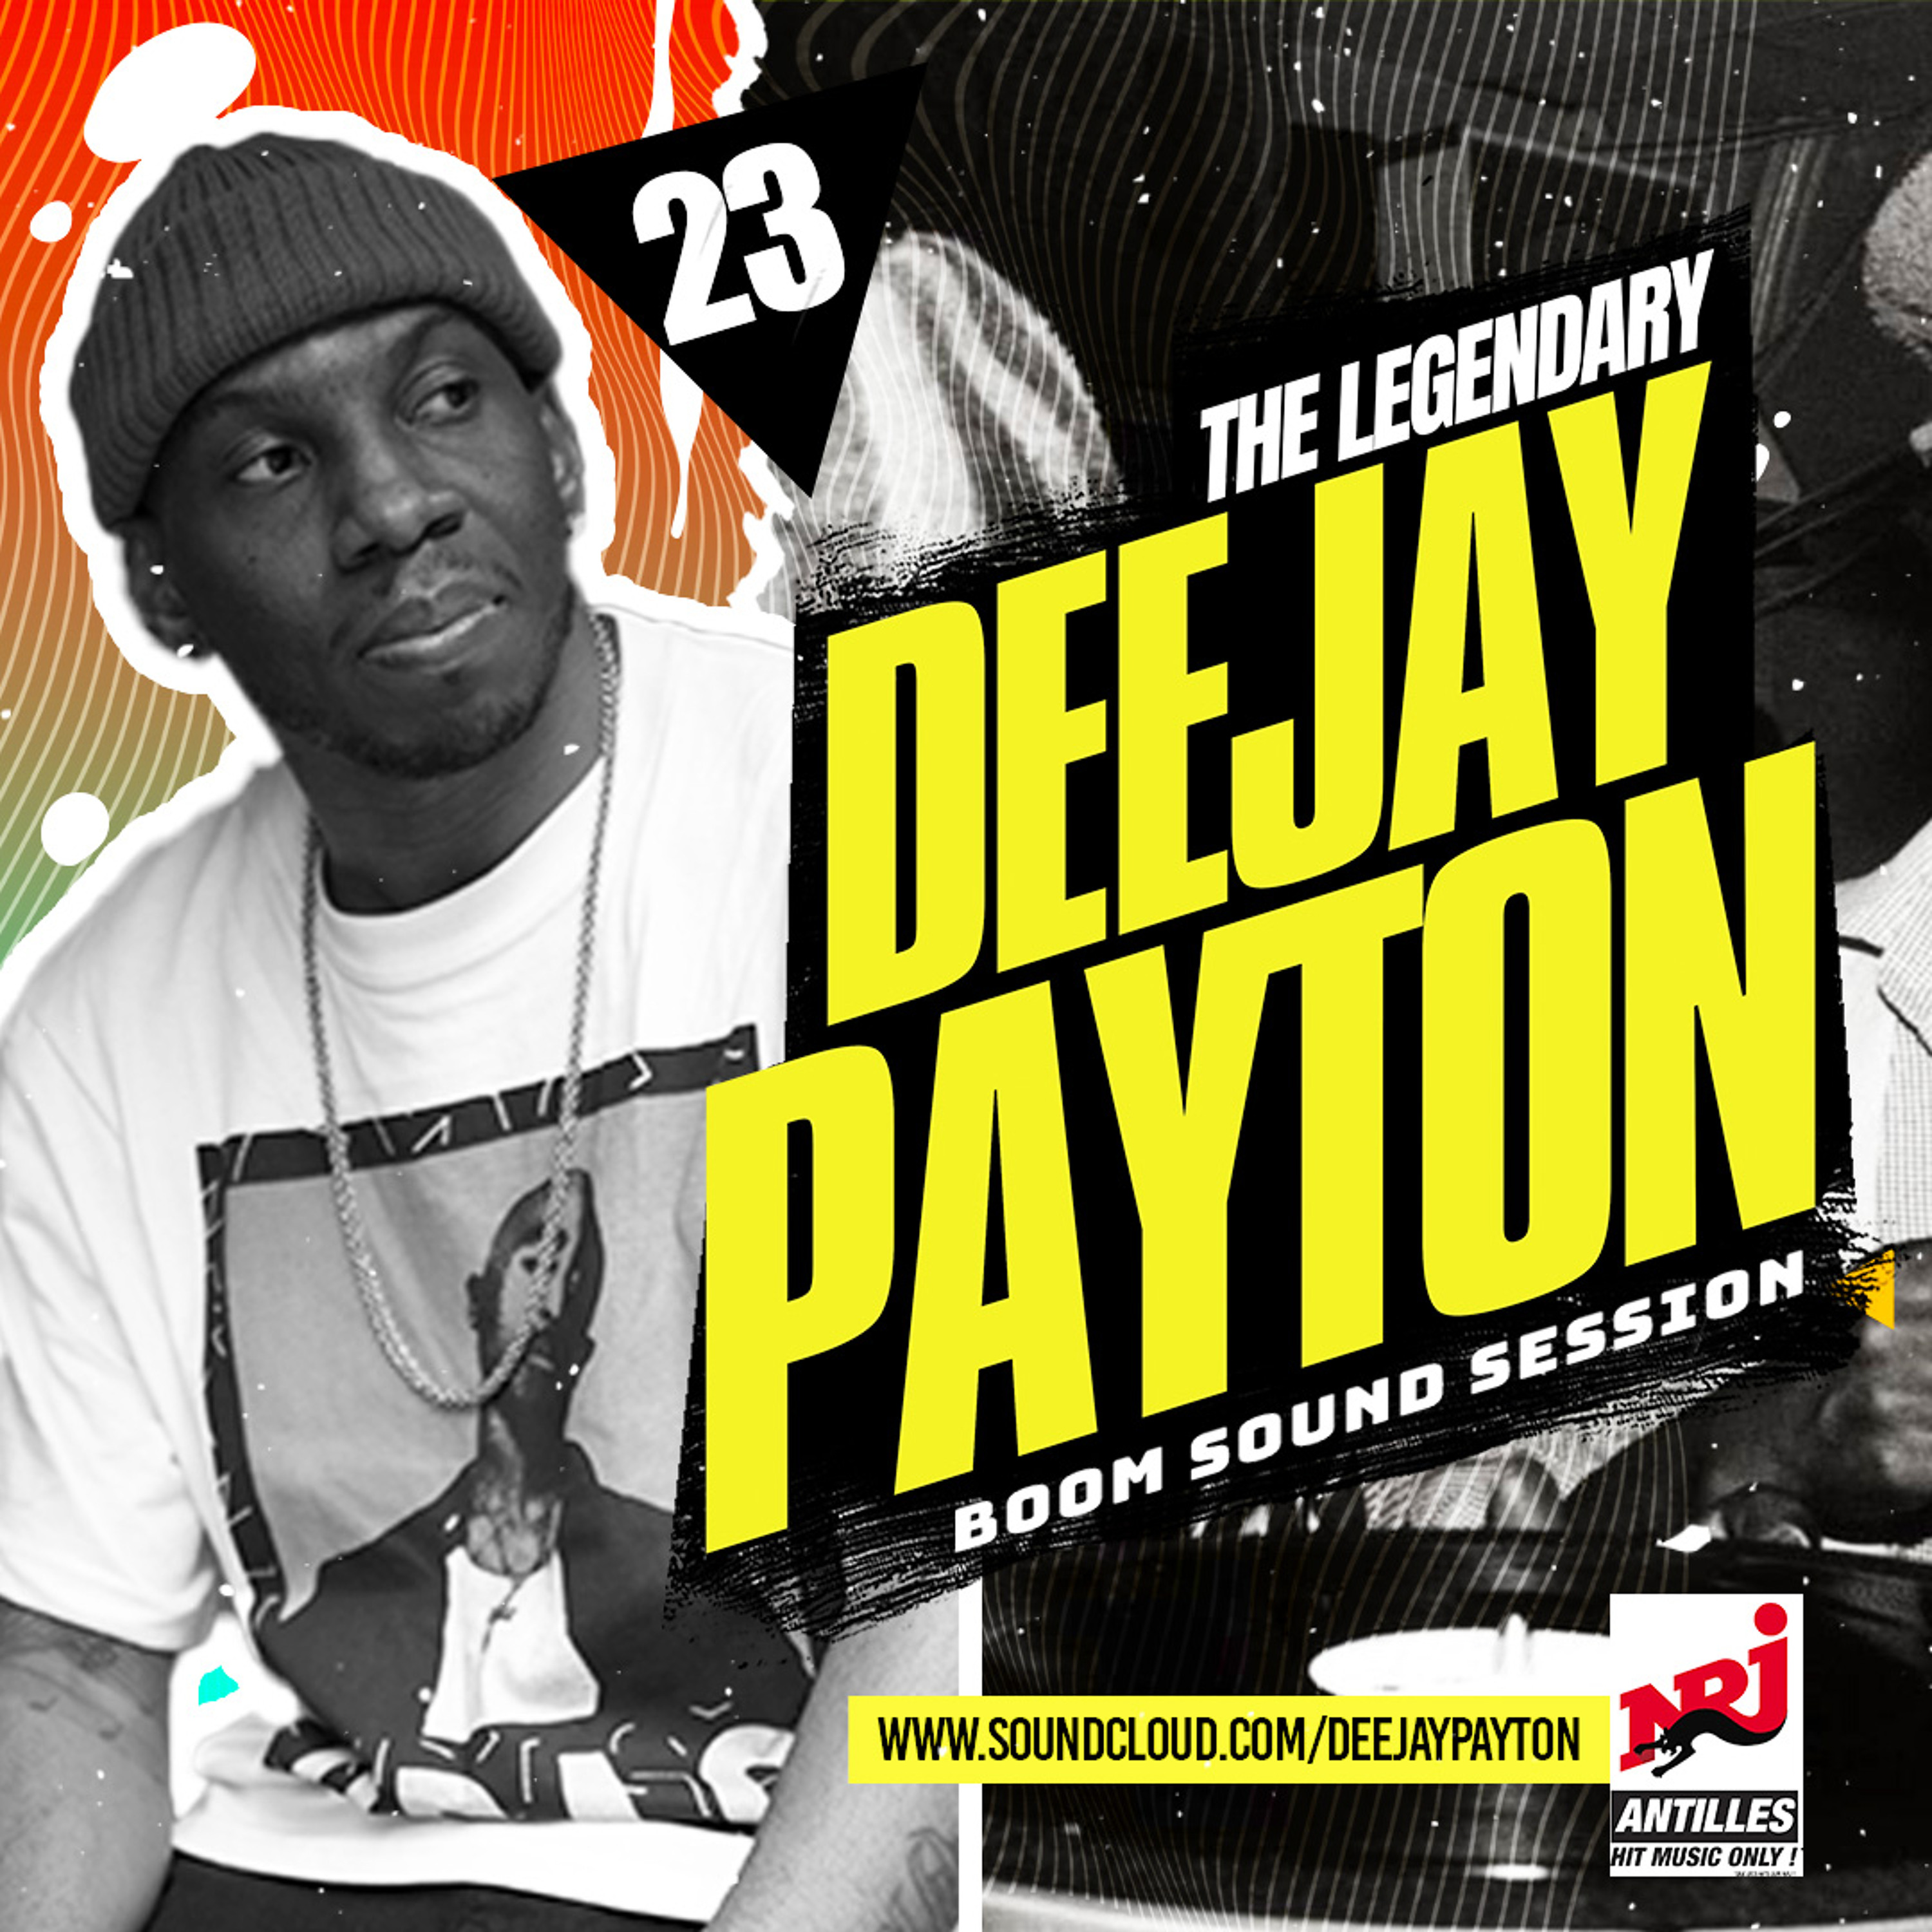 23# DJ PAYTON - BOOM SOUND S2 - 09.03.24